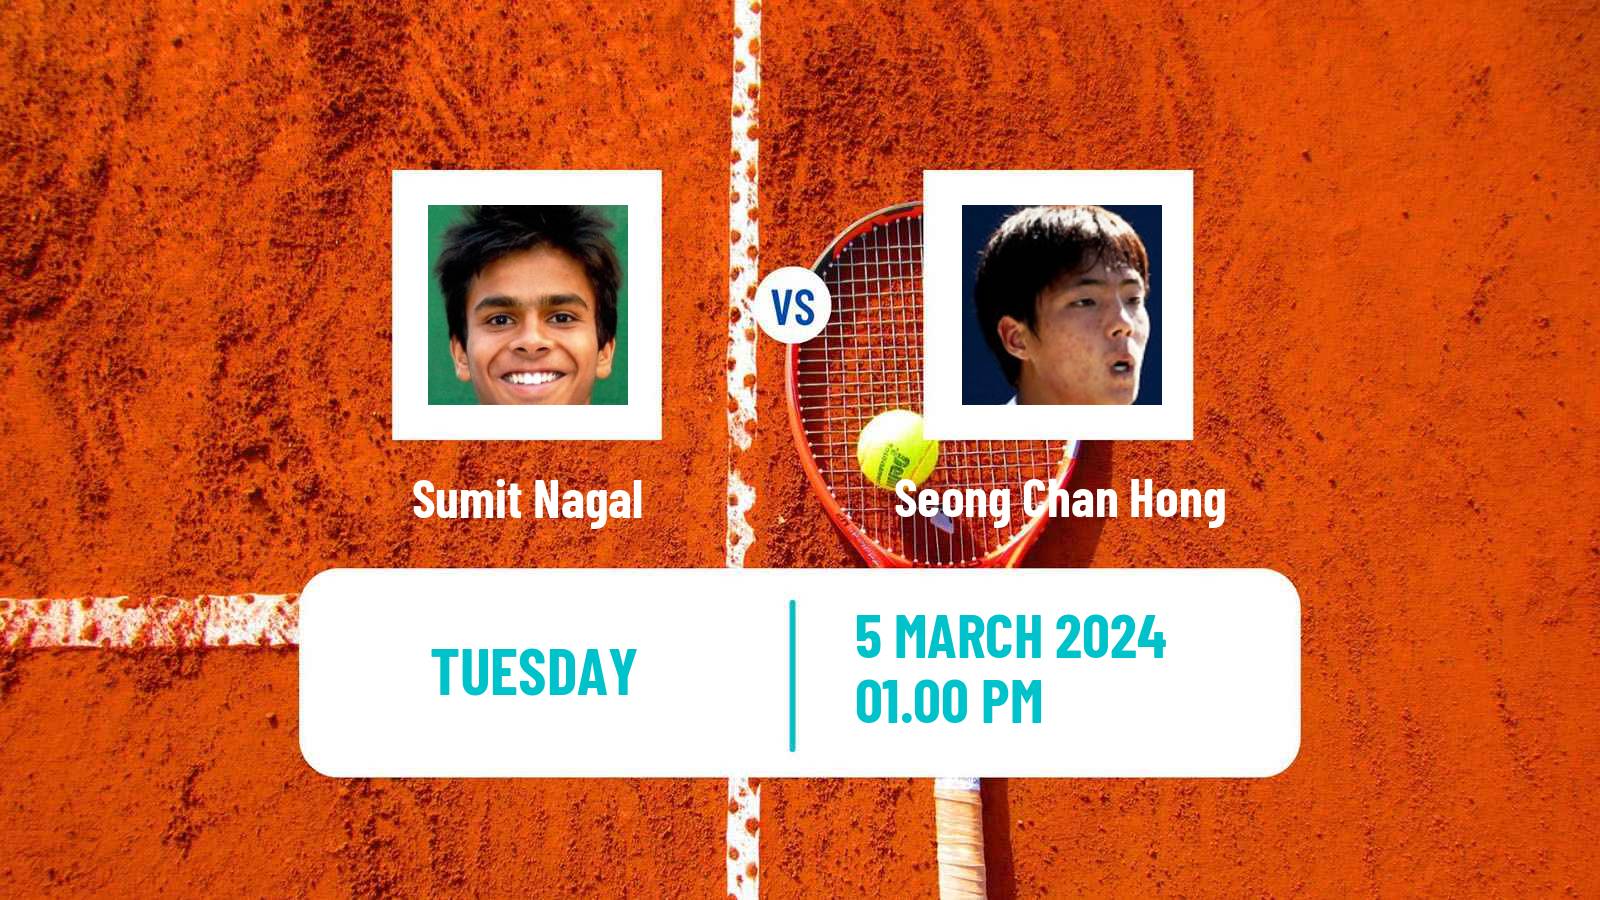 Tennis ATP Indian Wells Sumit Nagal - Seong Chan Hong